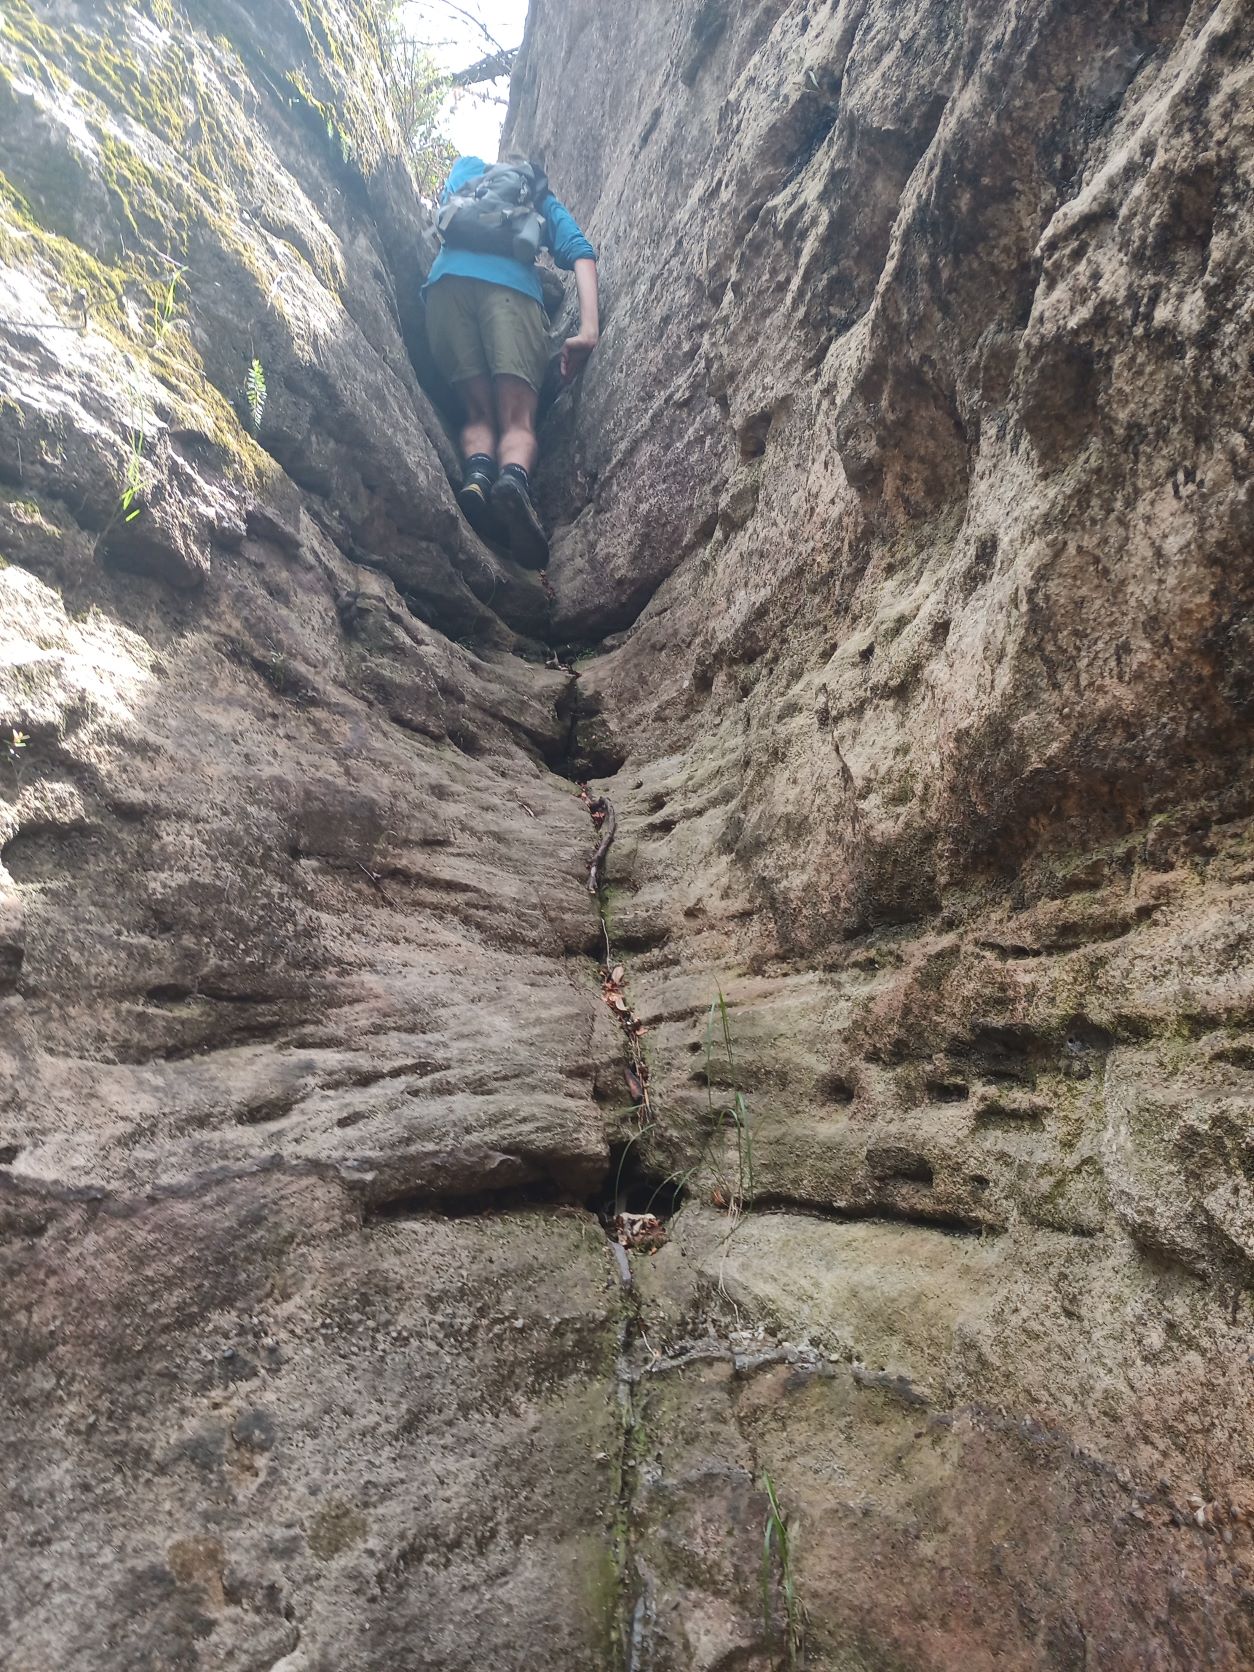 A tricky pagoda descent into Blue Rock Gap